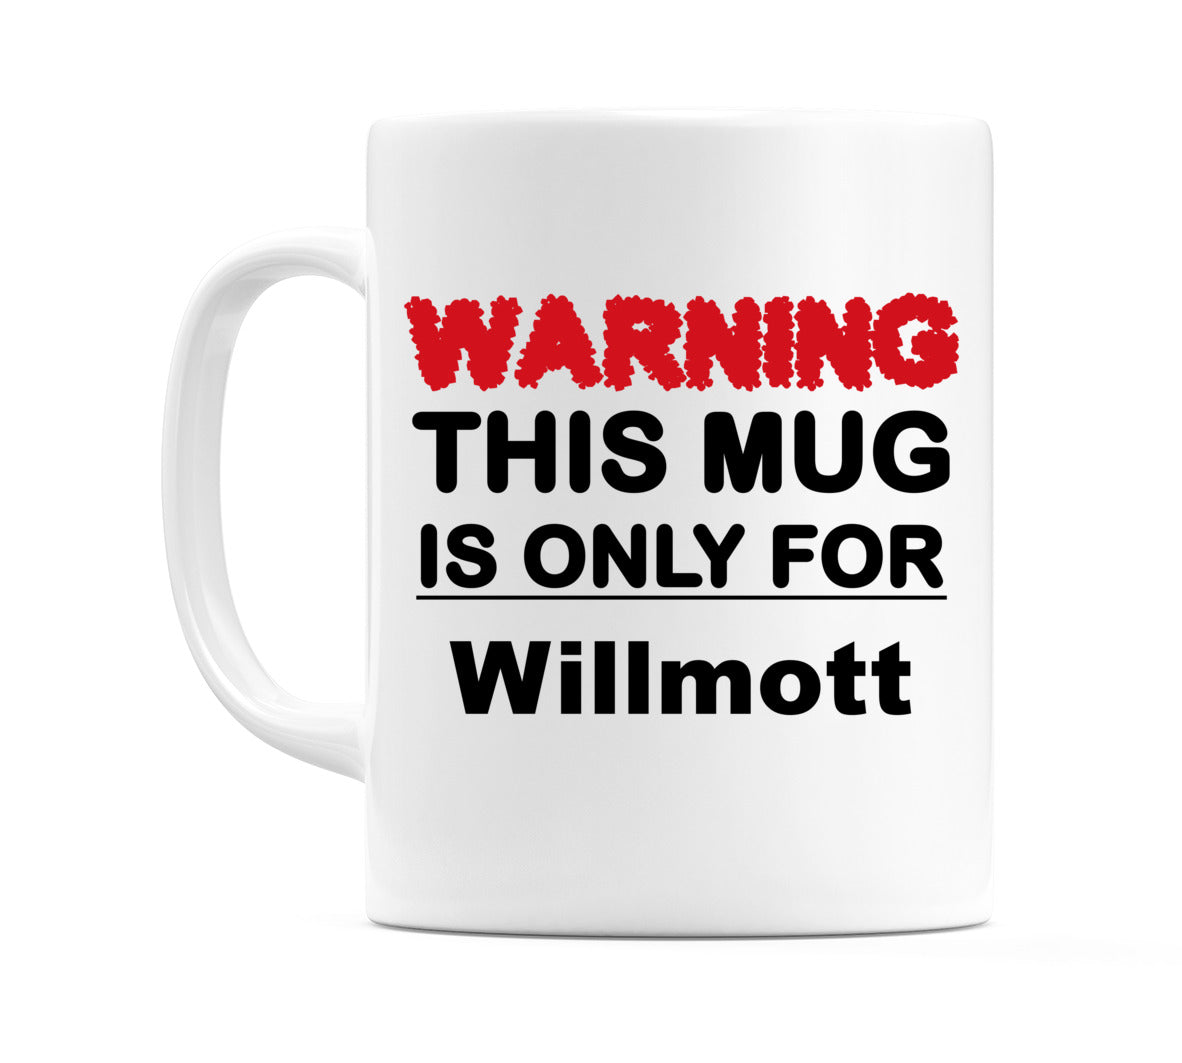 Warning This Mug is ONLY for Willmott Mug